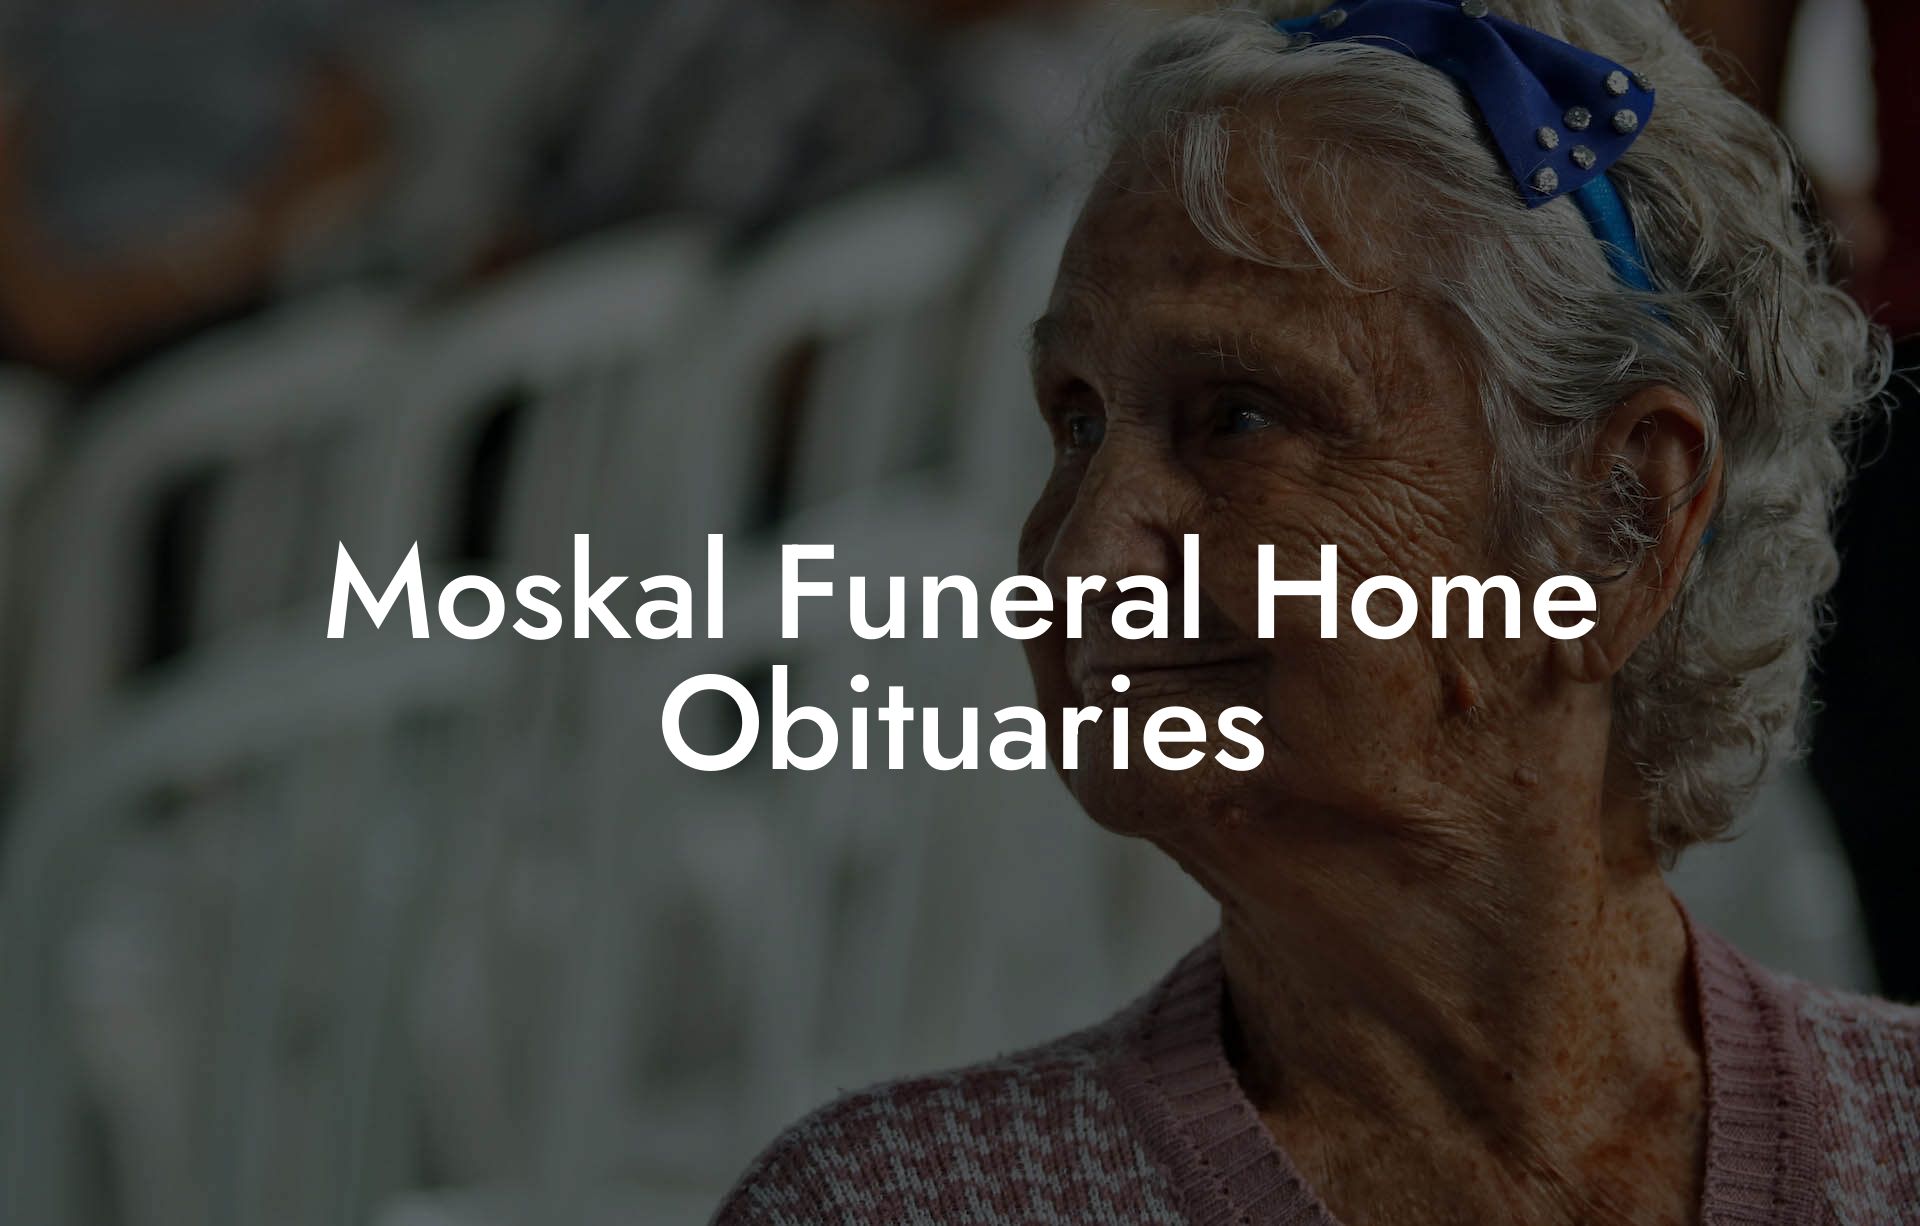 Moskal Funeral Home Obituaries